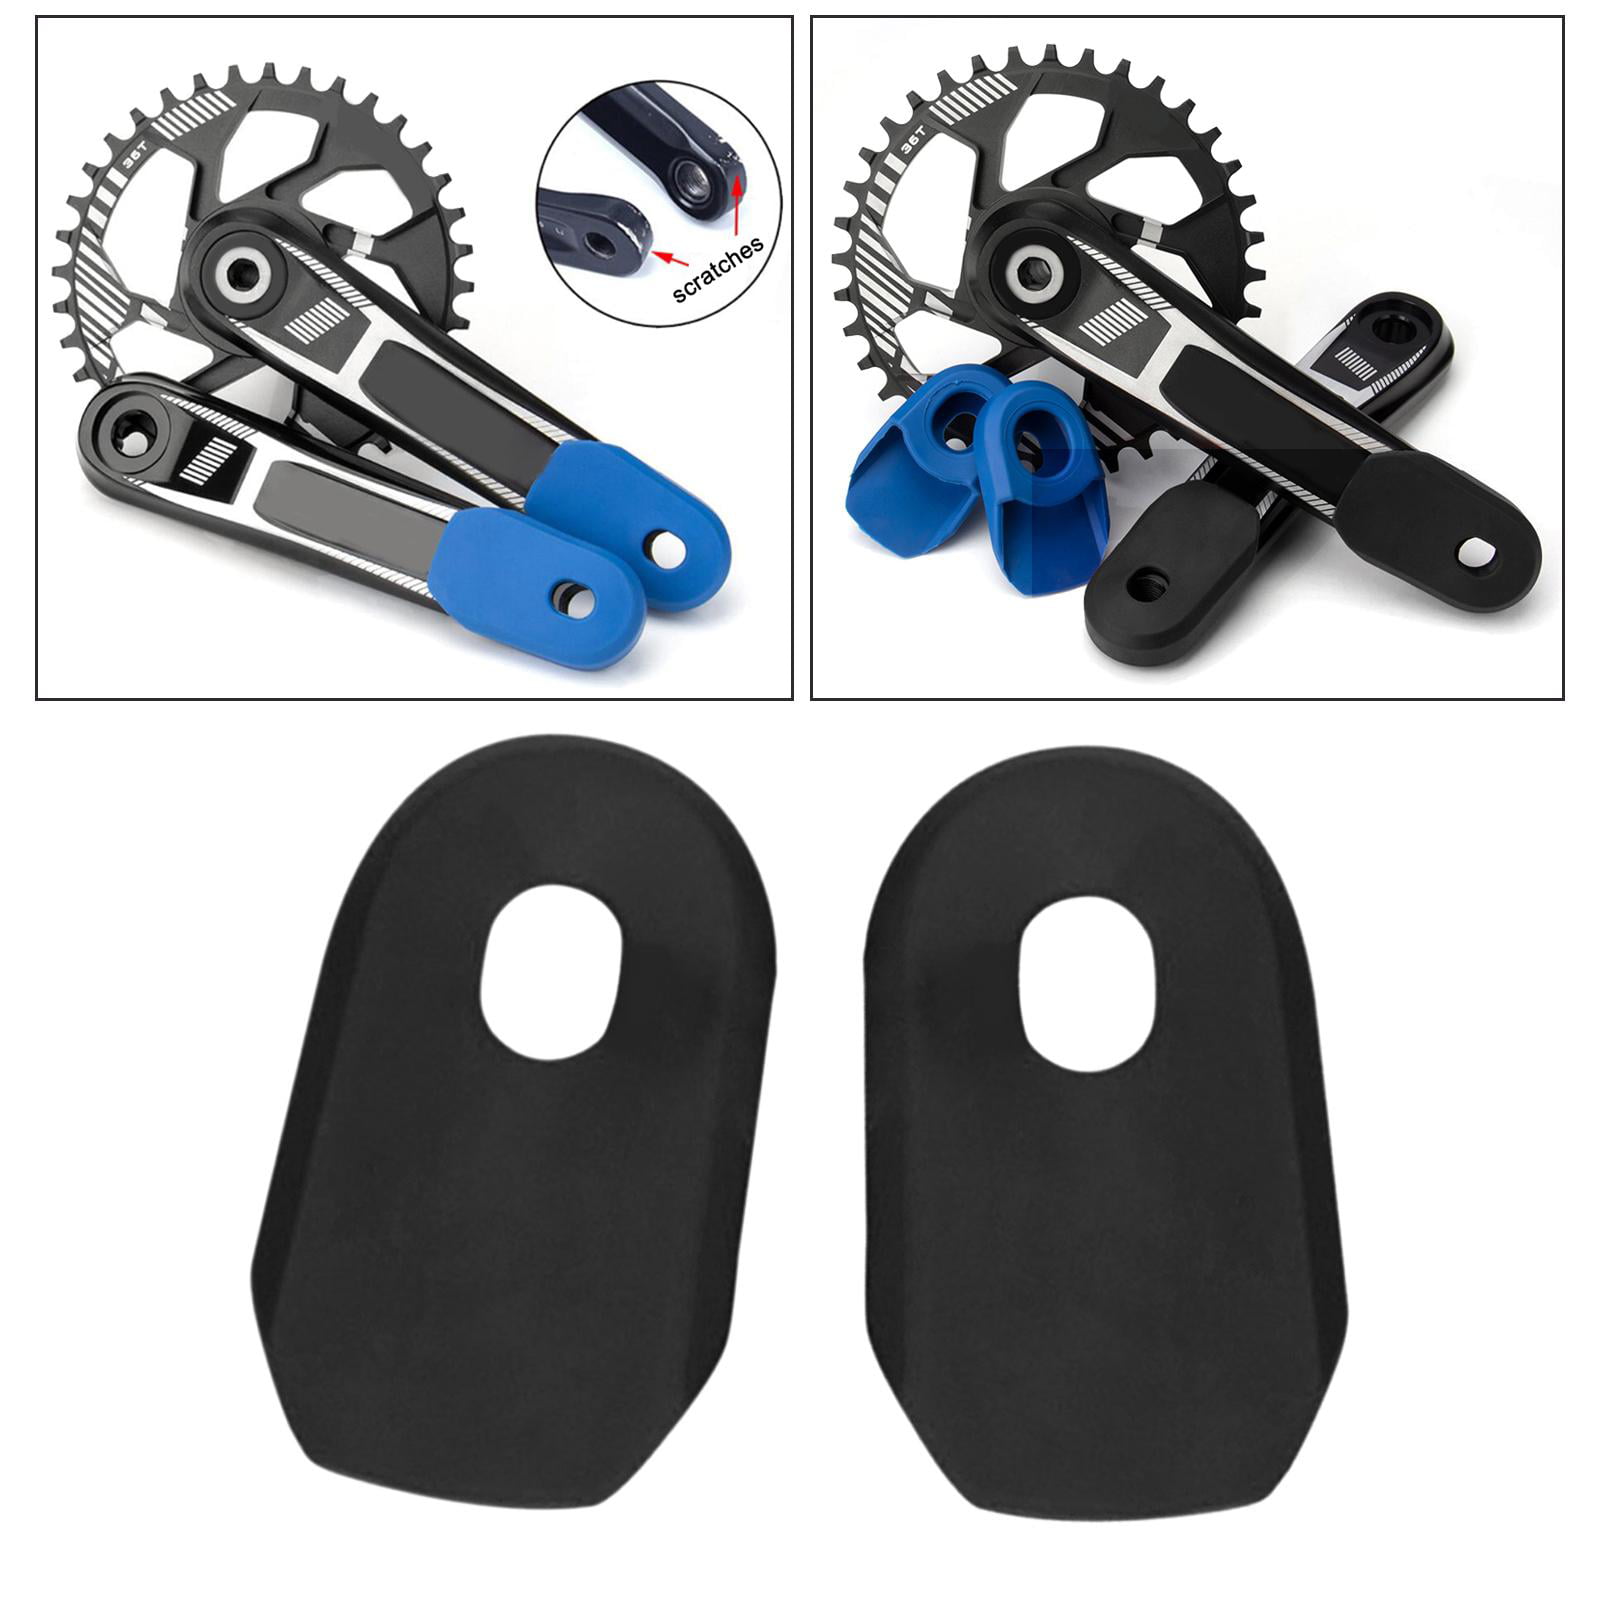 Black Silicone Bicycle Bike Crank Protector for Mountain Bike Road Bike Crank Arm Boots Protectors 